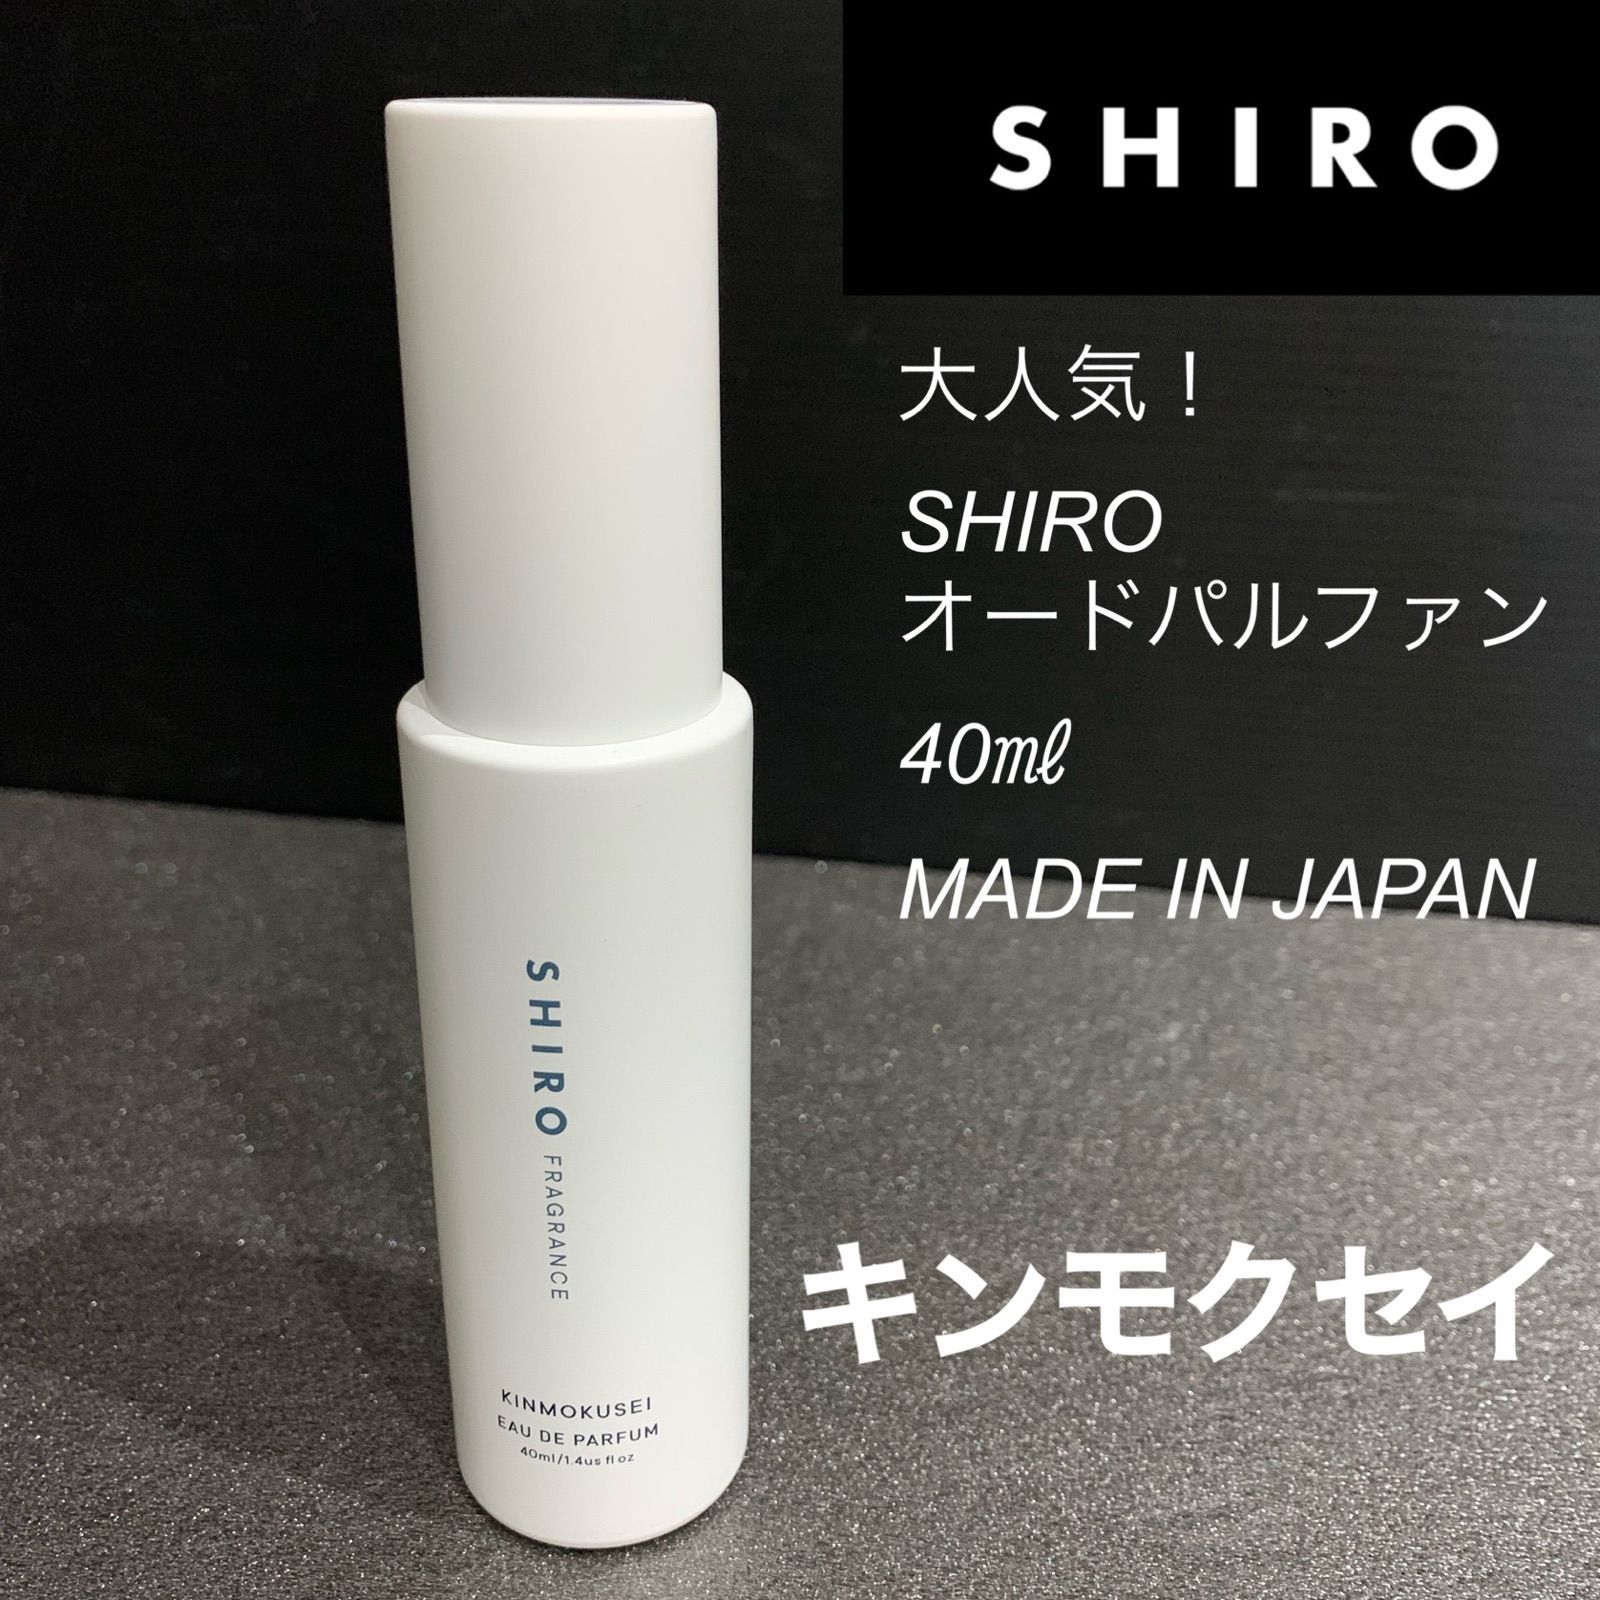 SHIRO オードパルファン 40ml キンモクセイ 箱なし - メルカリ